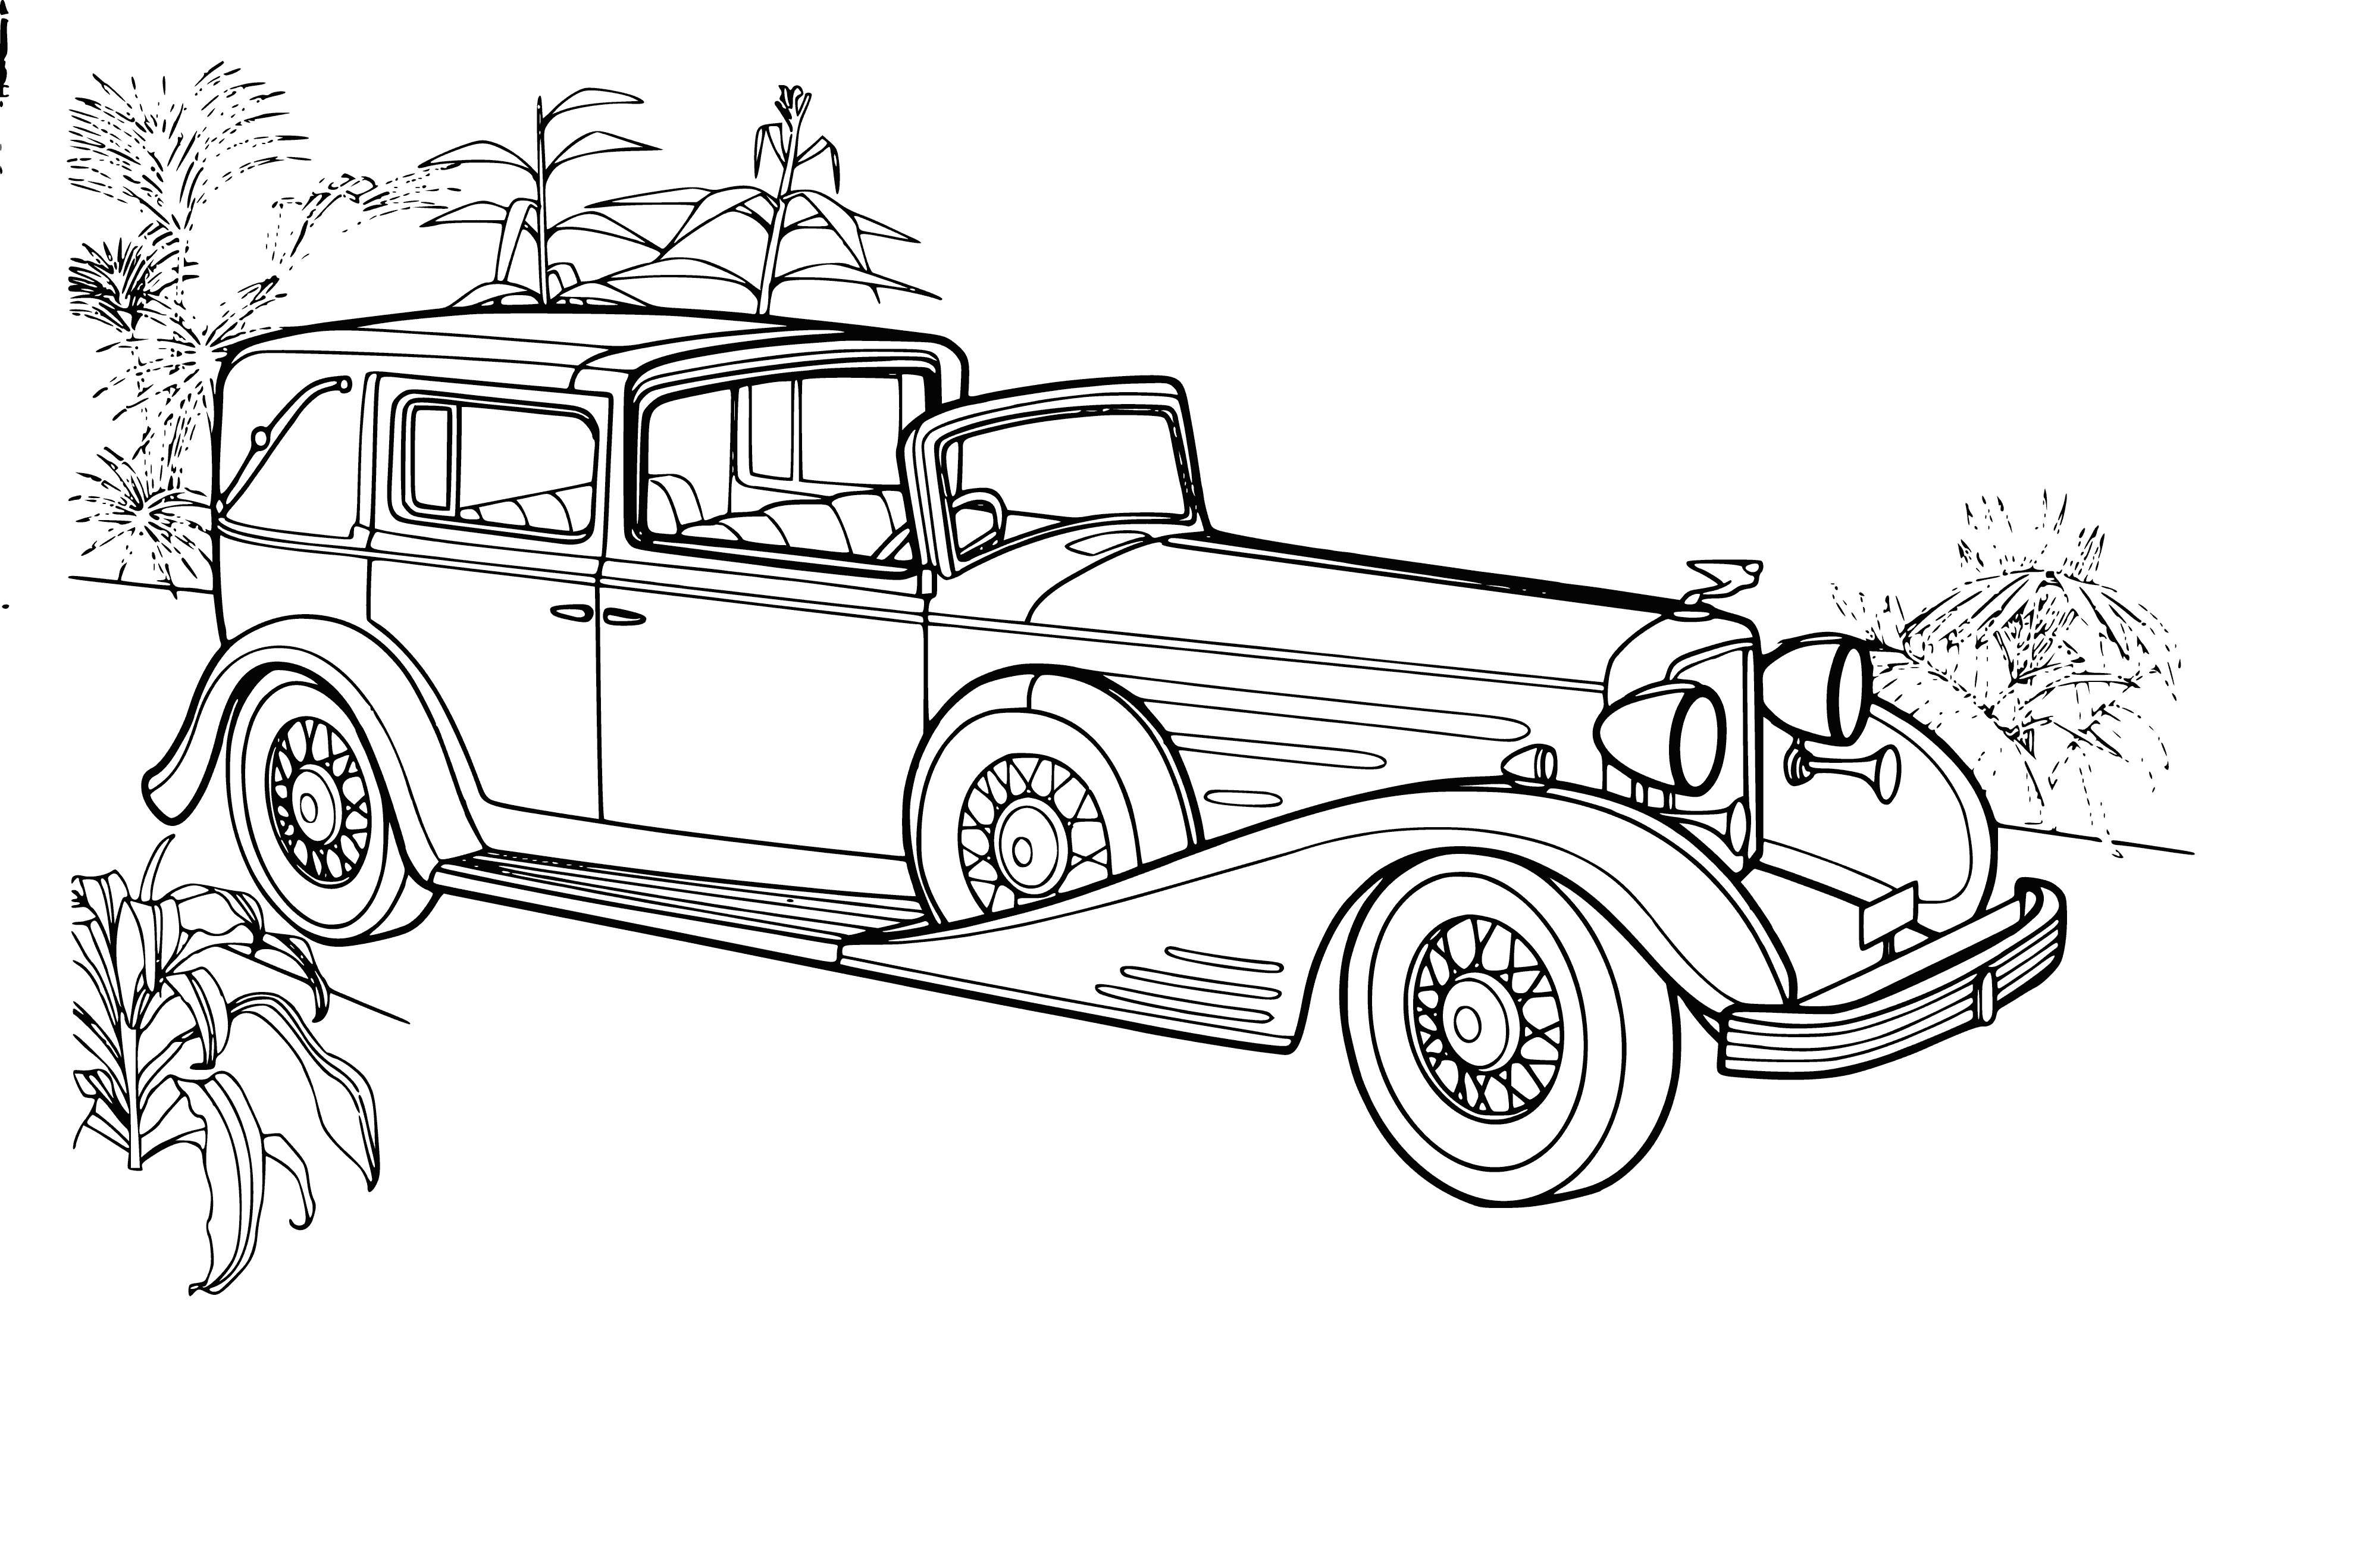 Cadillac Town Car coloring page